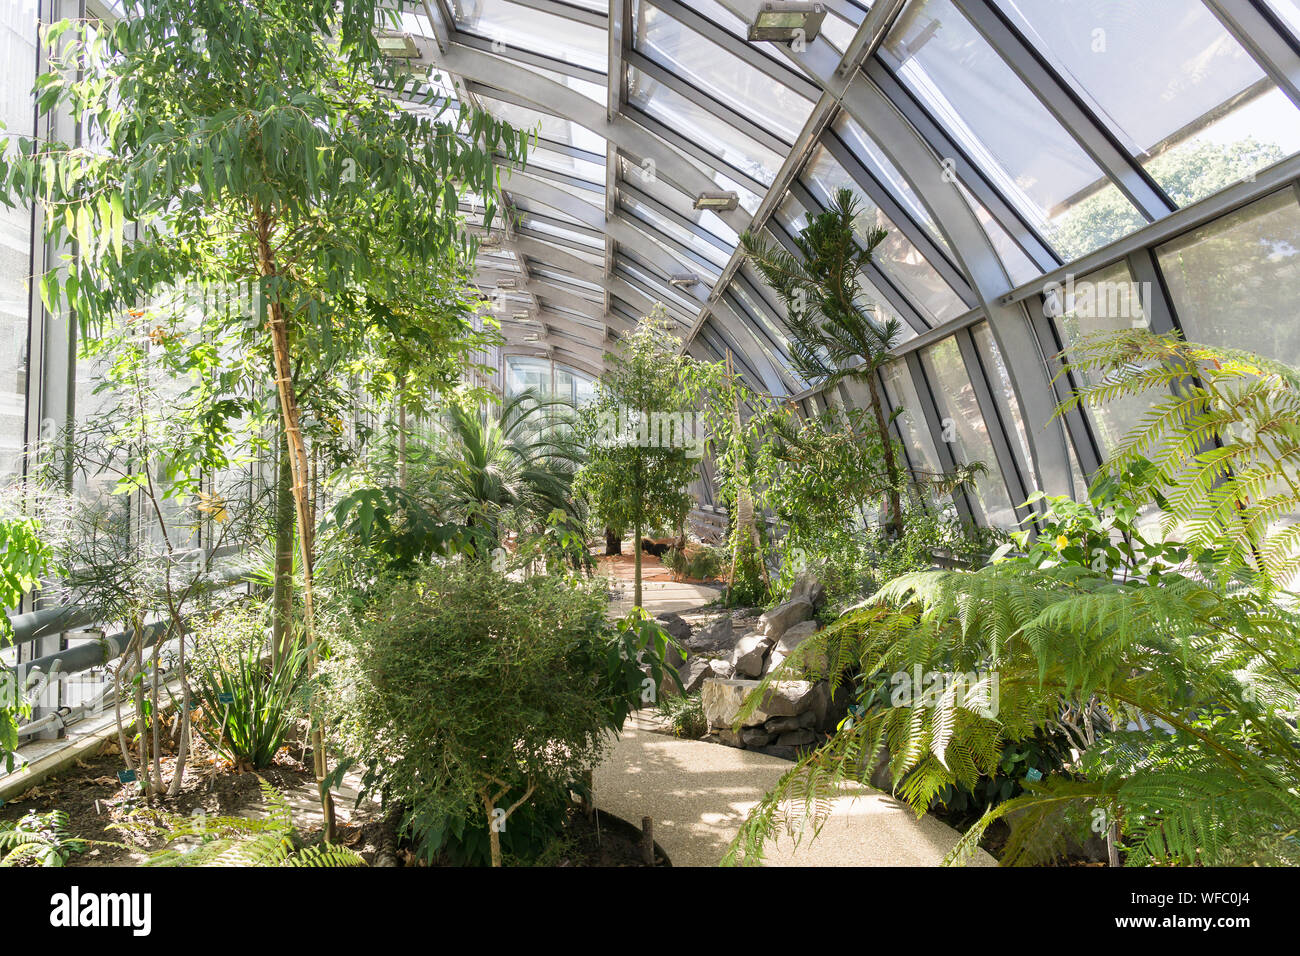 Paris green architecture - a greenhouse surrounding the tennis stadium Simon Mathieu, situated in the Jardin des Serres d'Auteuil botanical garden. Stock Photo